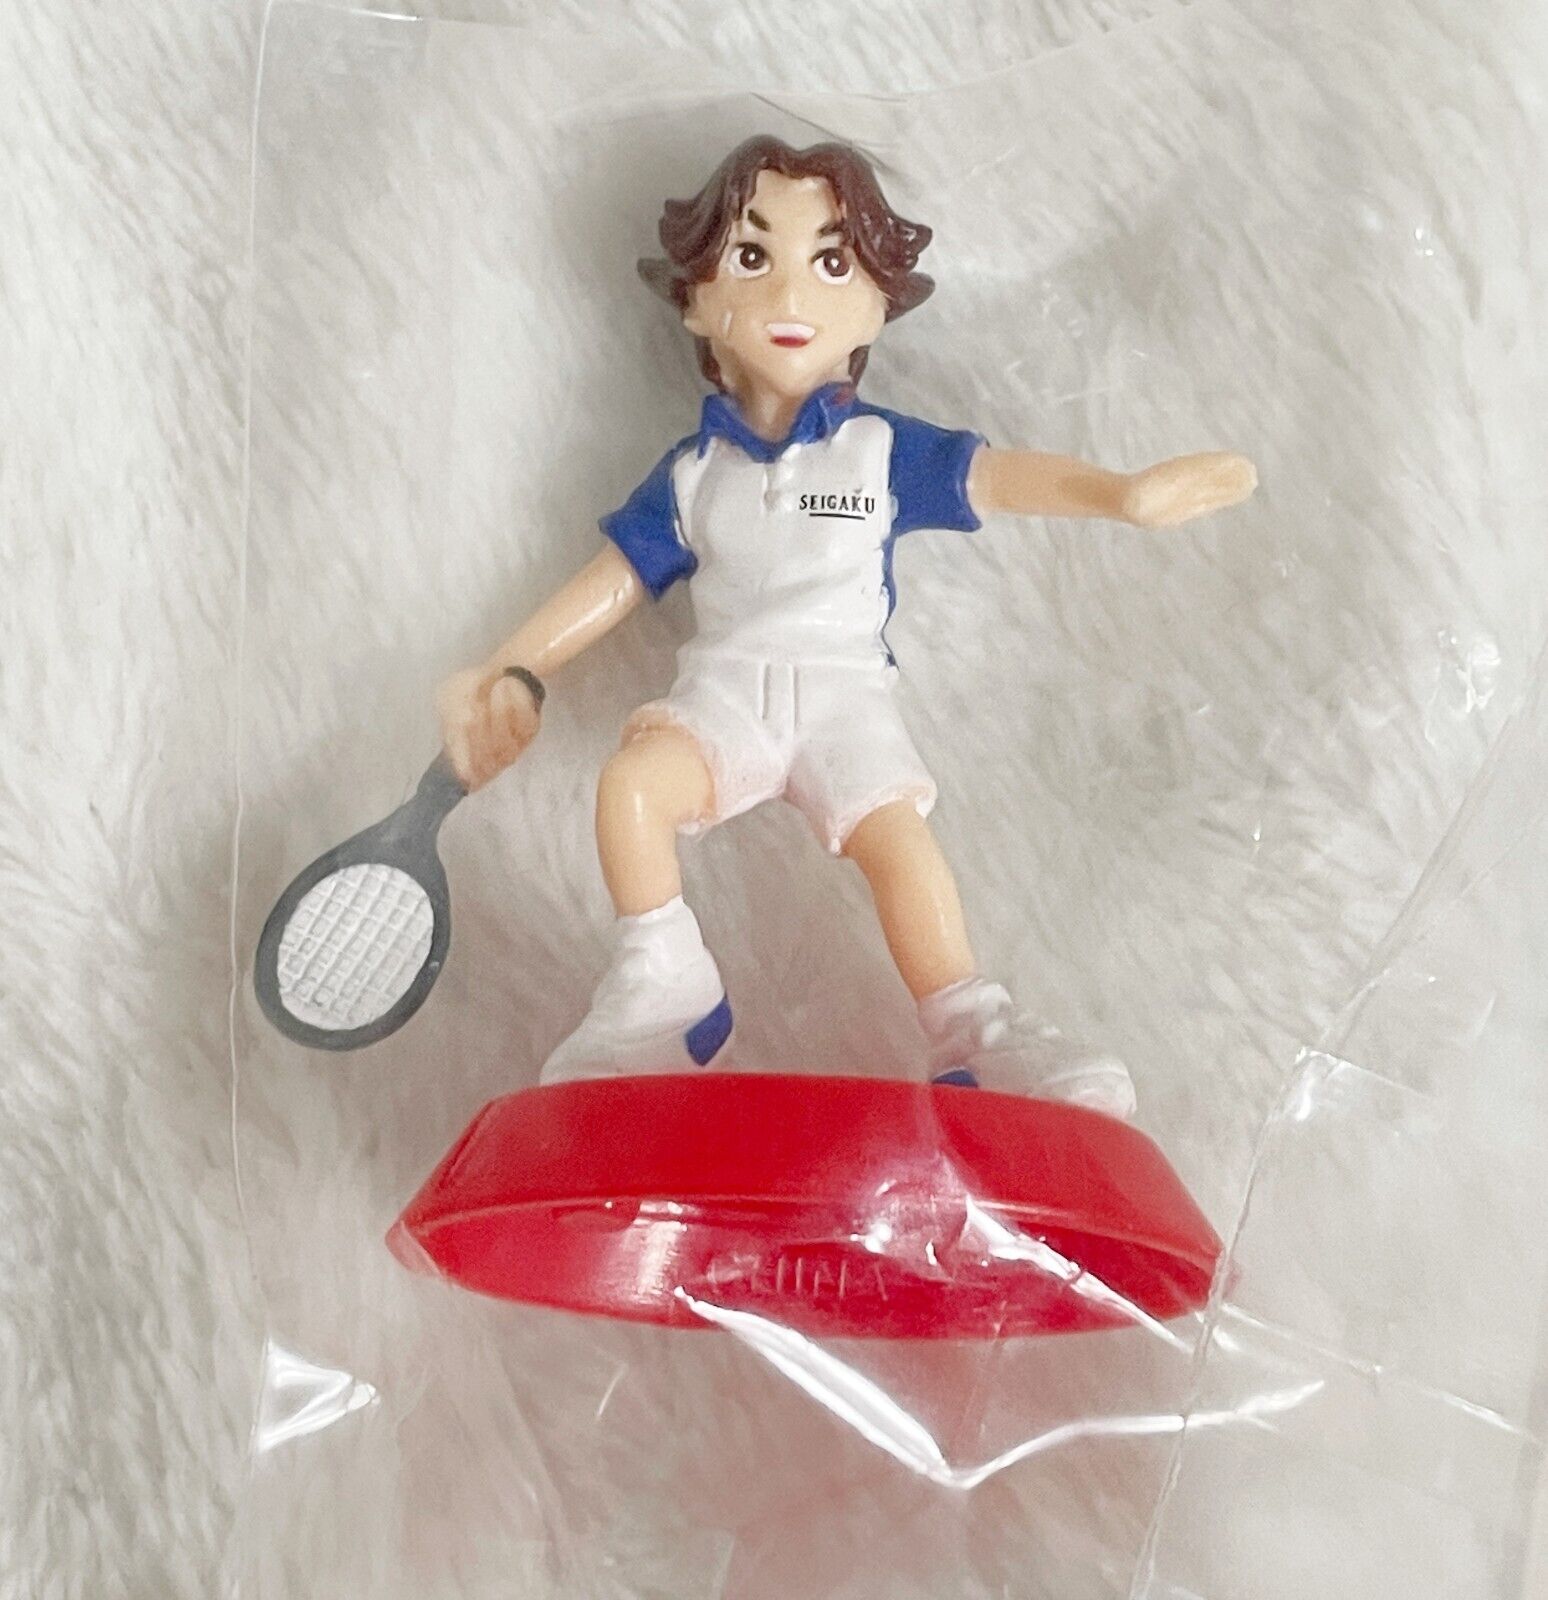 Prince of Tennis and Coca-Cola, Seigaku Eiji Kikumaru Mini PVC Bottle Top Figure